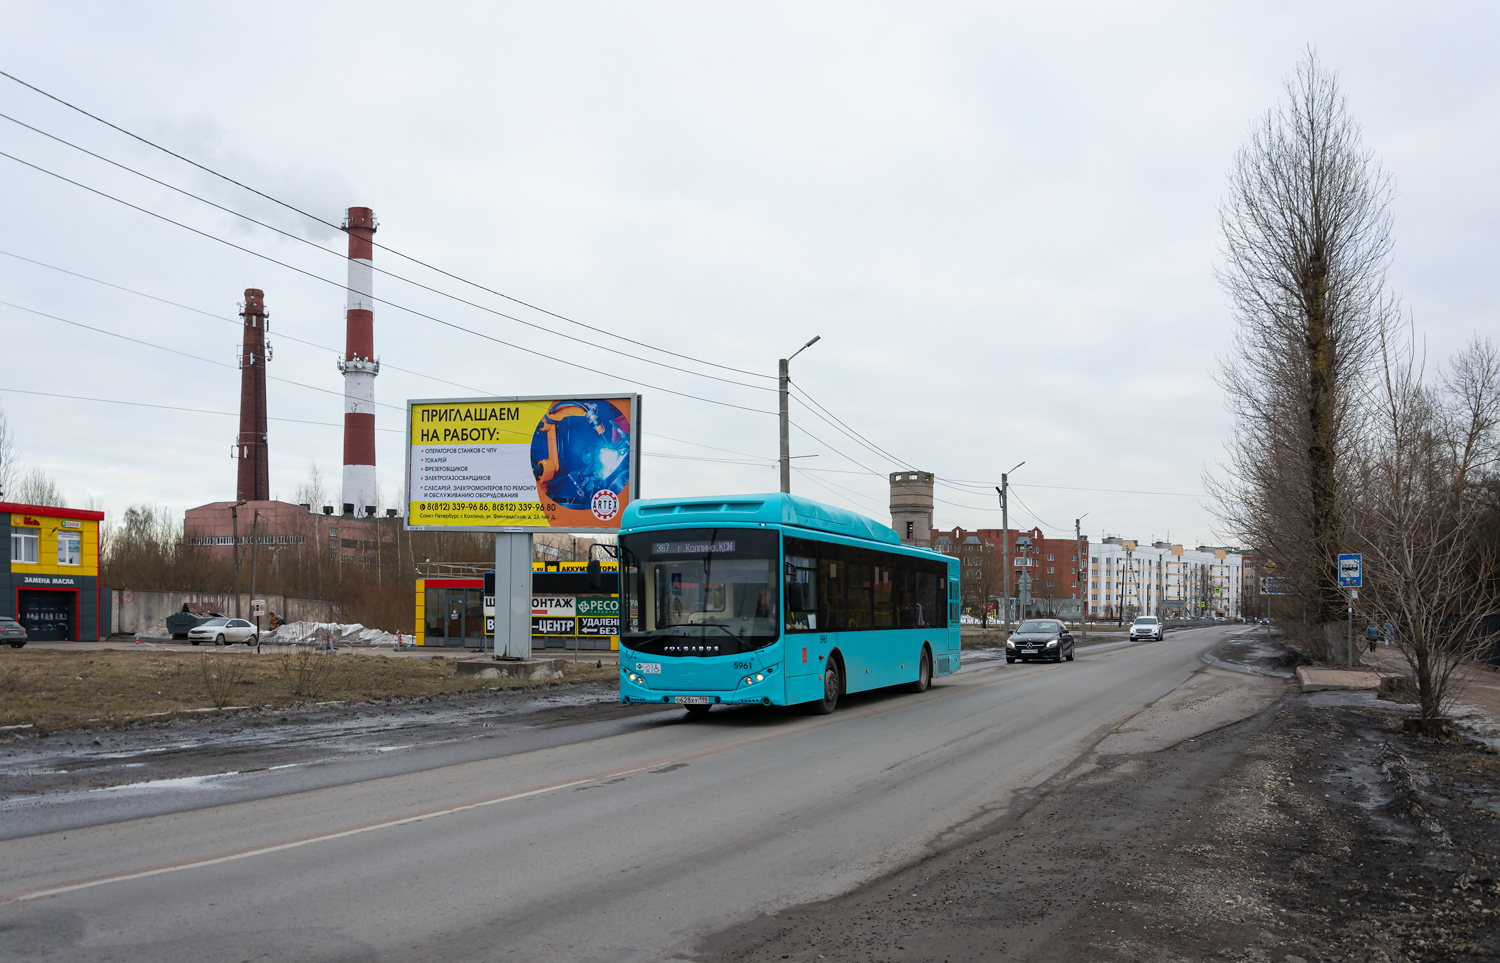 Saint Petersburg, Volgabus-5270.G2 (CNG) No. 5961